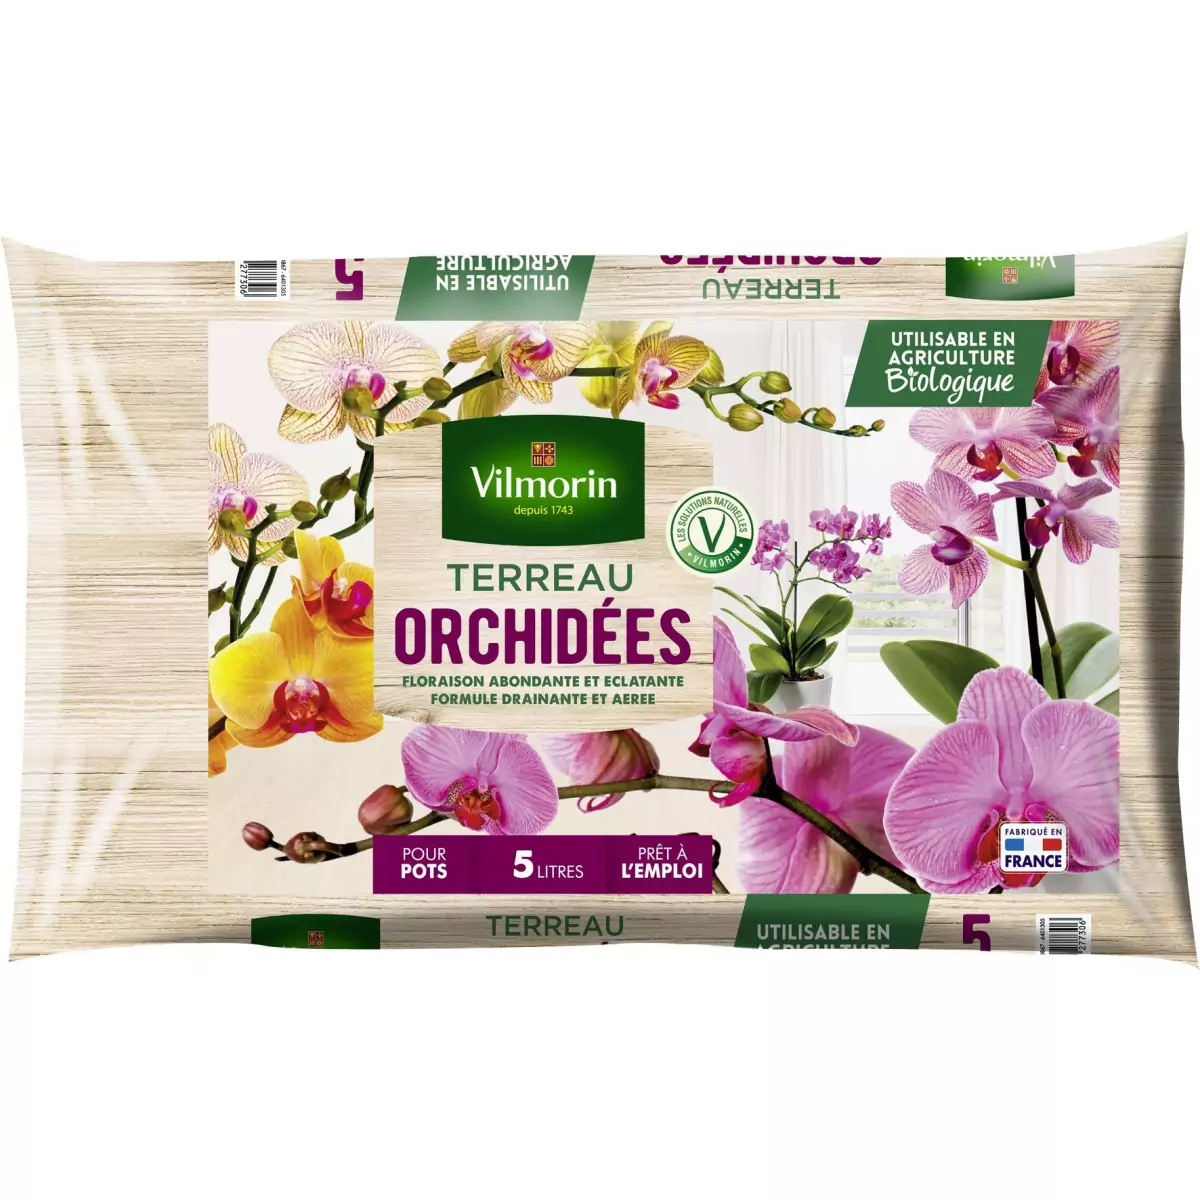 Orchid soil 5 liter bag